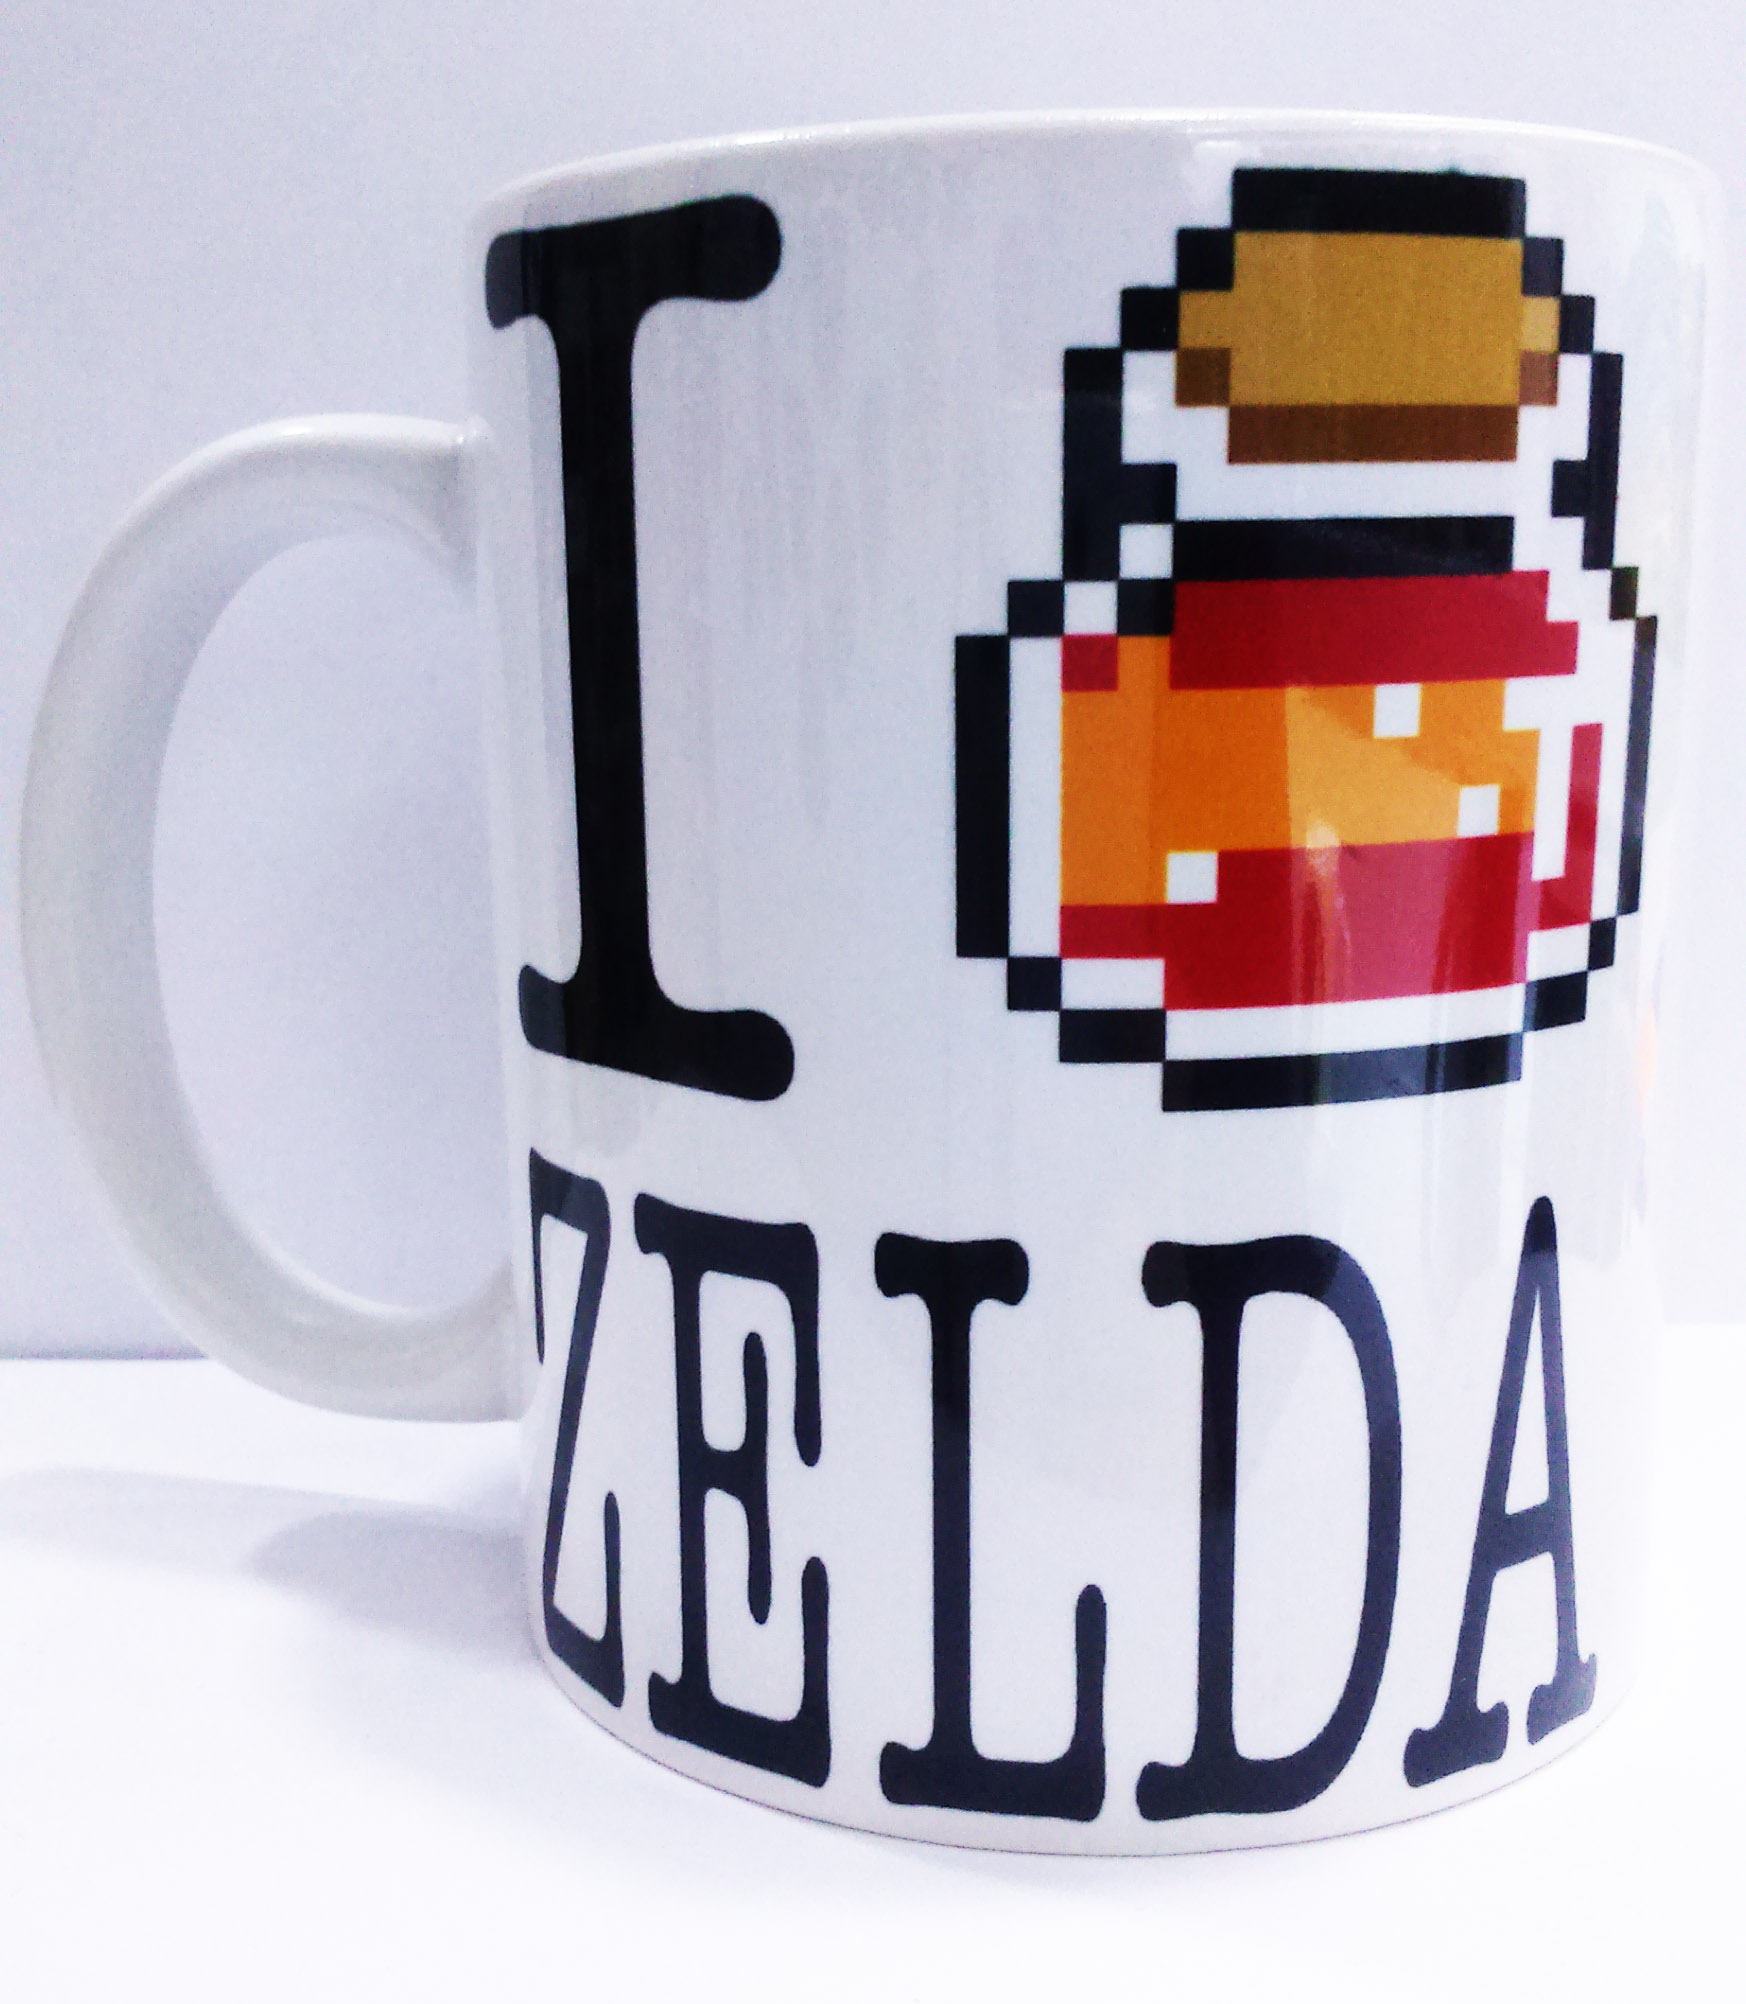 I love Zelda